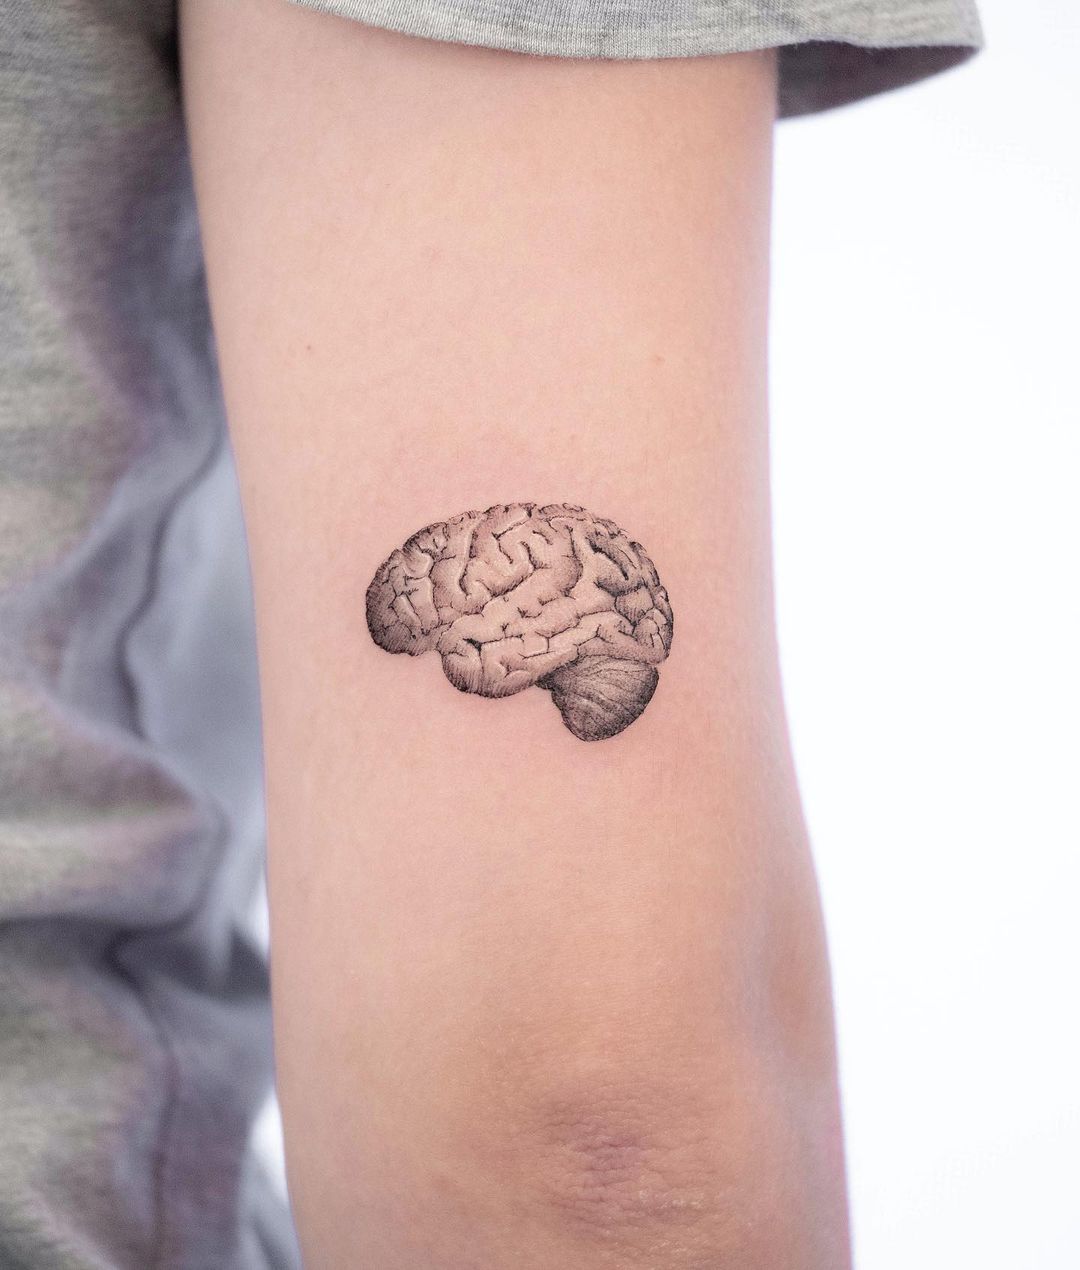 Unique Minimalist Brain Tattoo